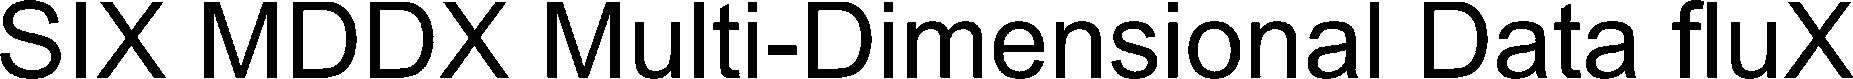 Trademark Logo SIX MDDX MULTI-DIMENSIONAL DATA FLUX